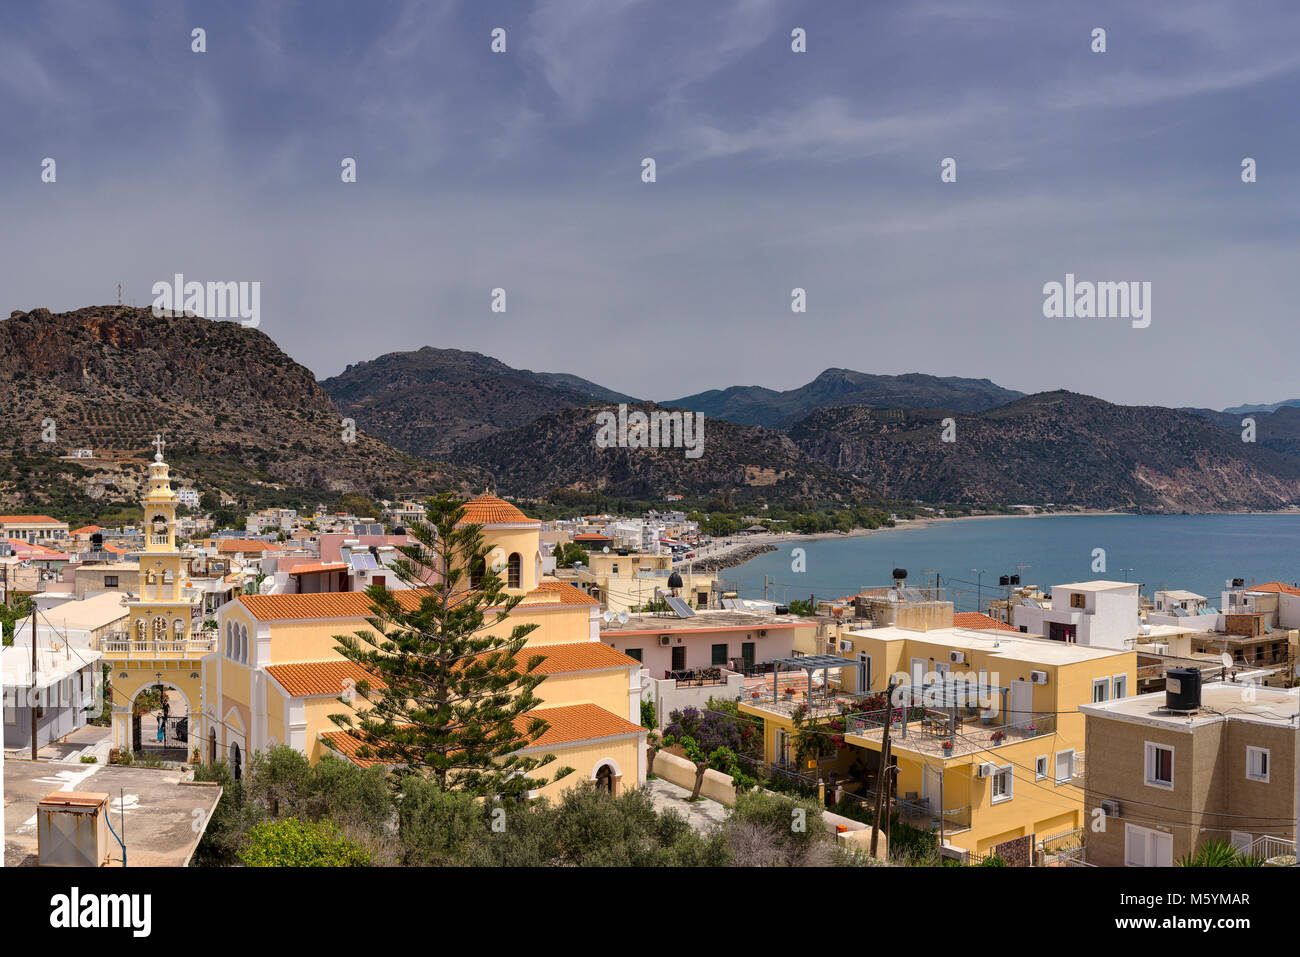 View over the city, Paleochora, Greece Stock Photo